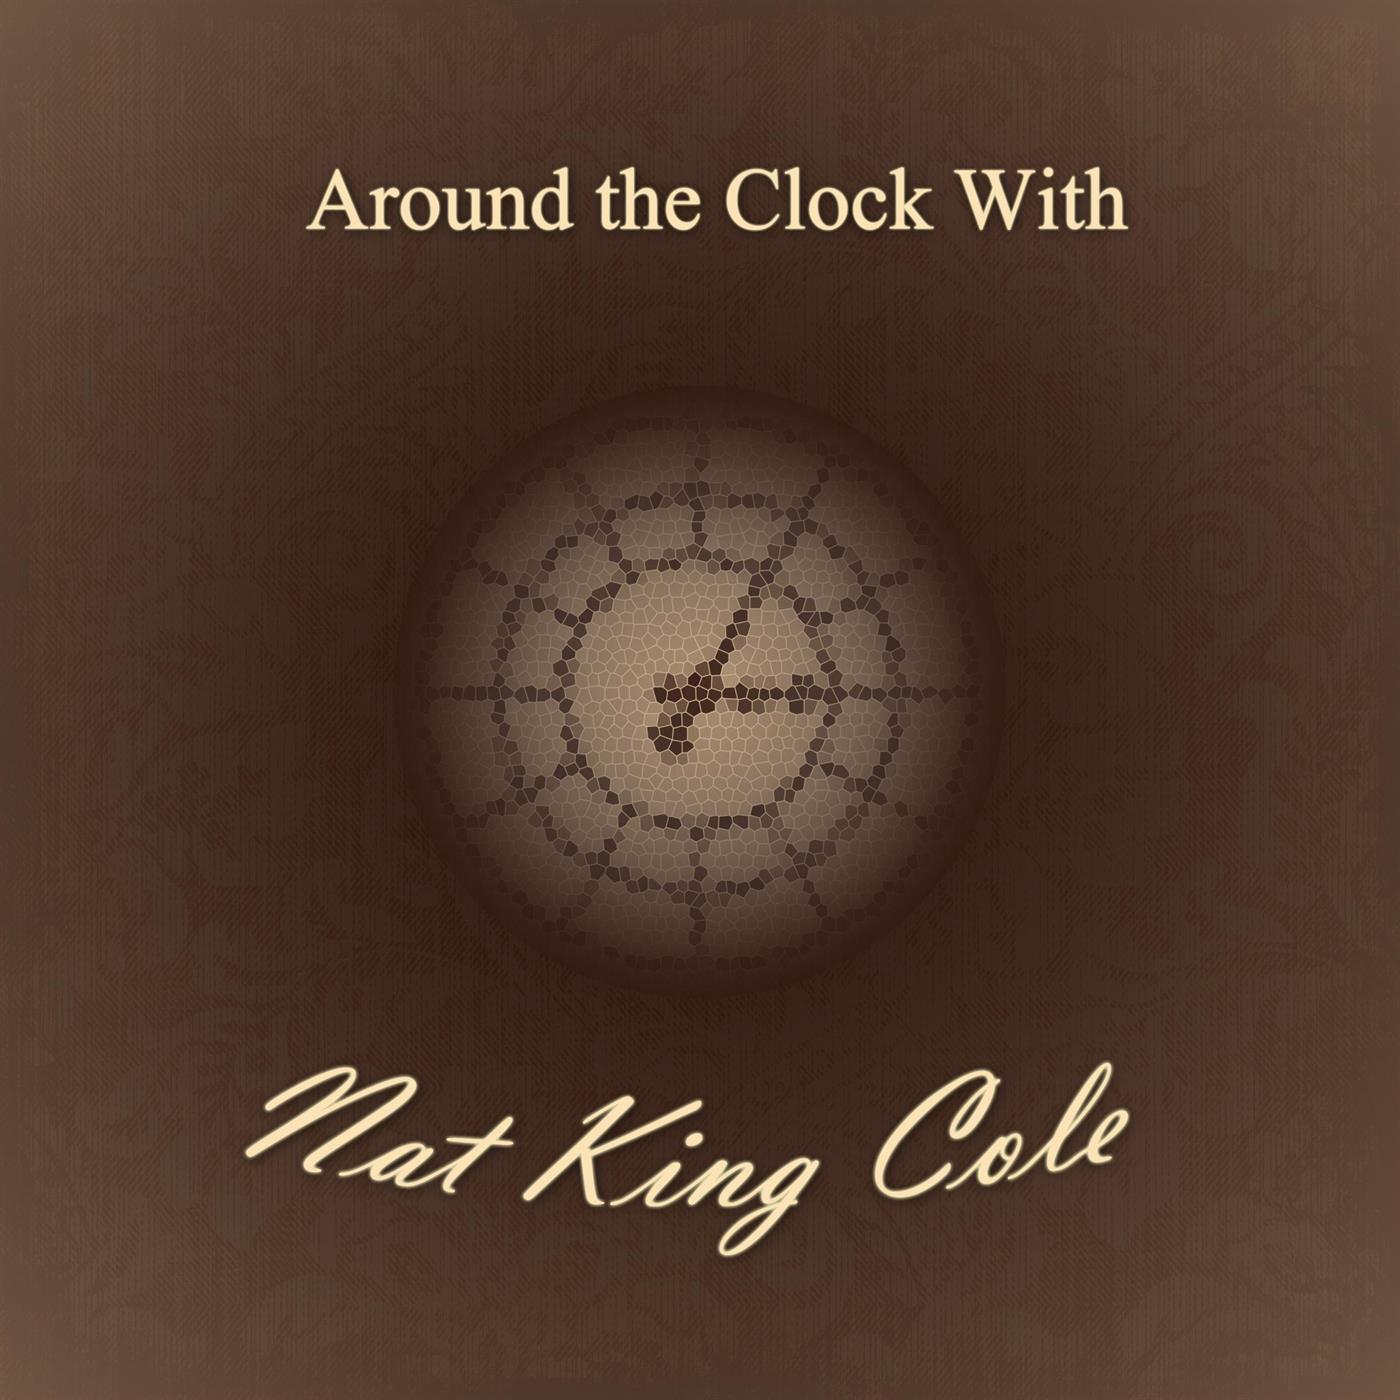 Around the Clock With专辑